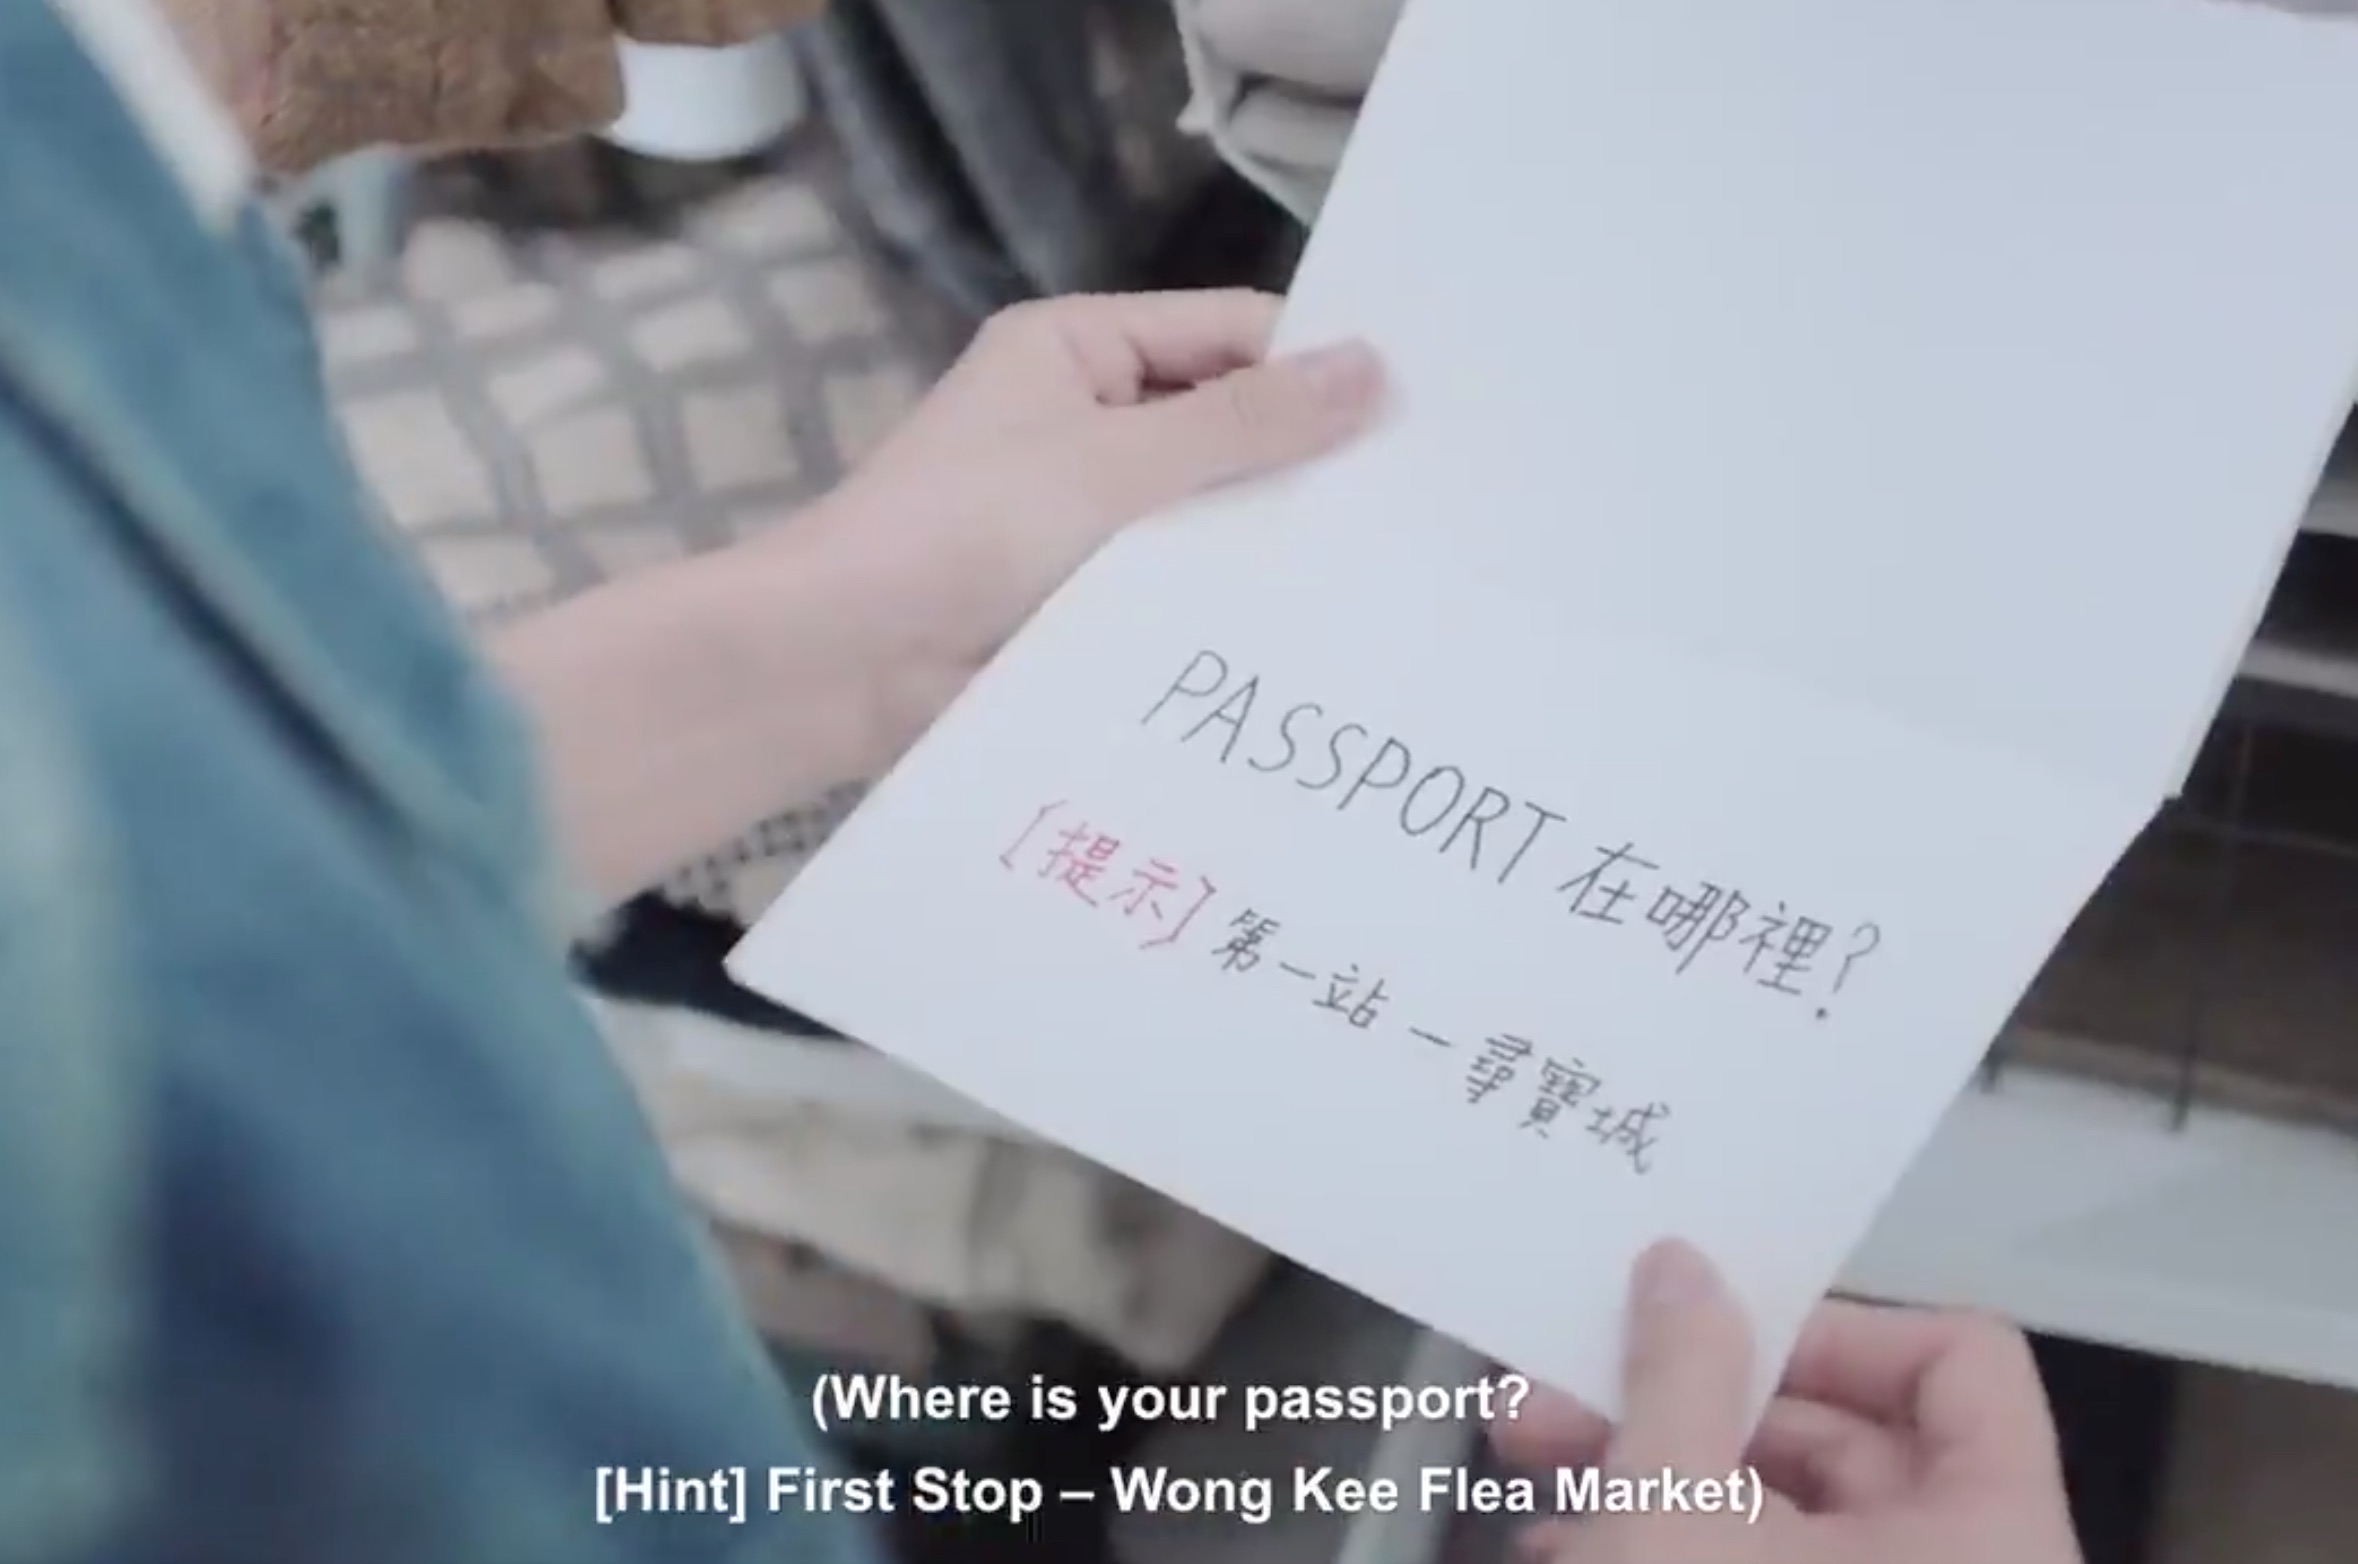 A screen shot from the Hong Kong Tourism Board video.